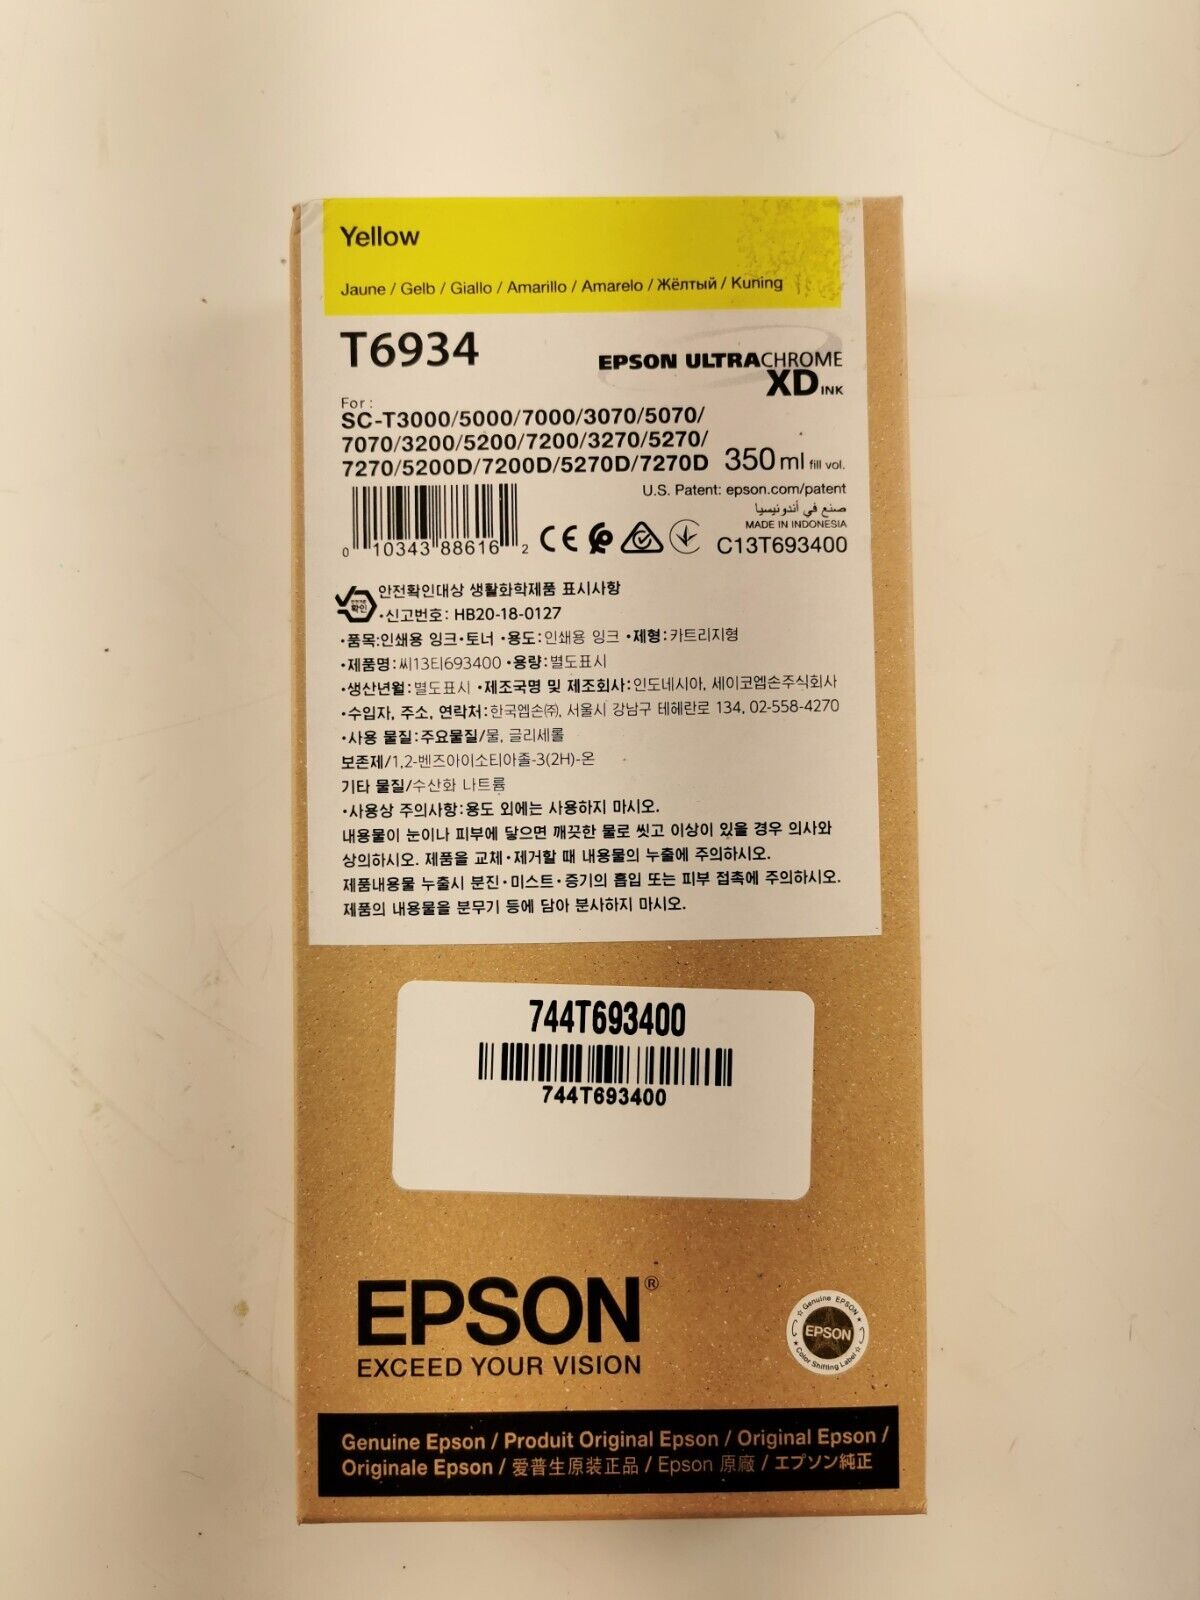 Epson ultra chrome xd ink T6934, Yellow